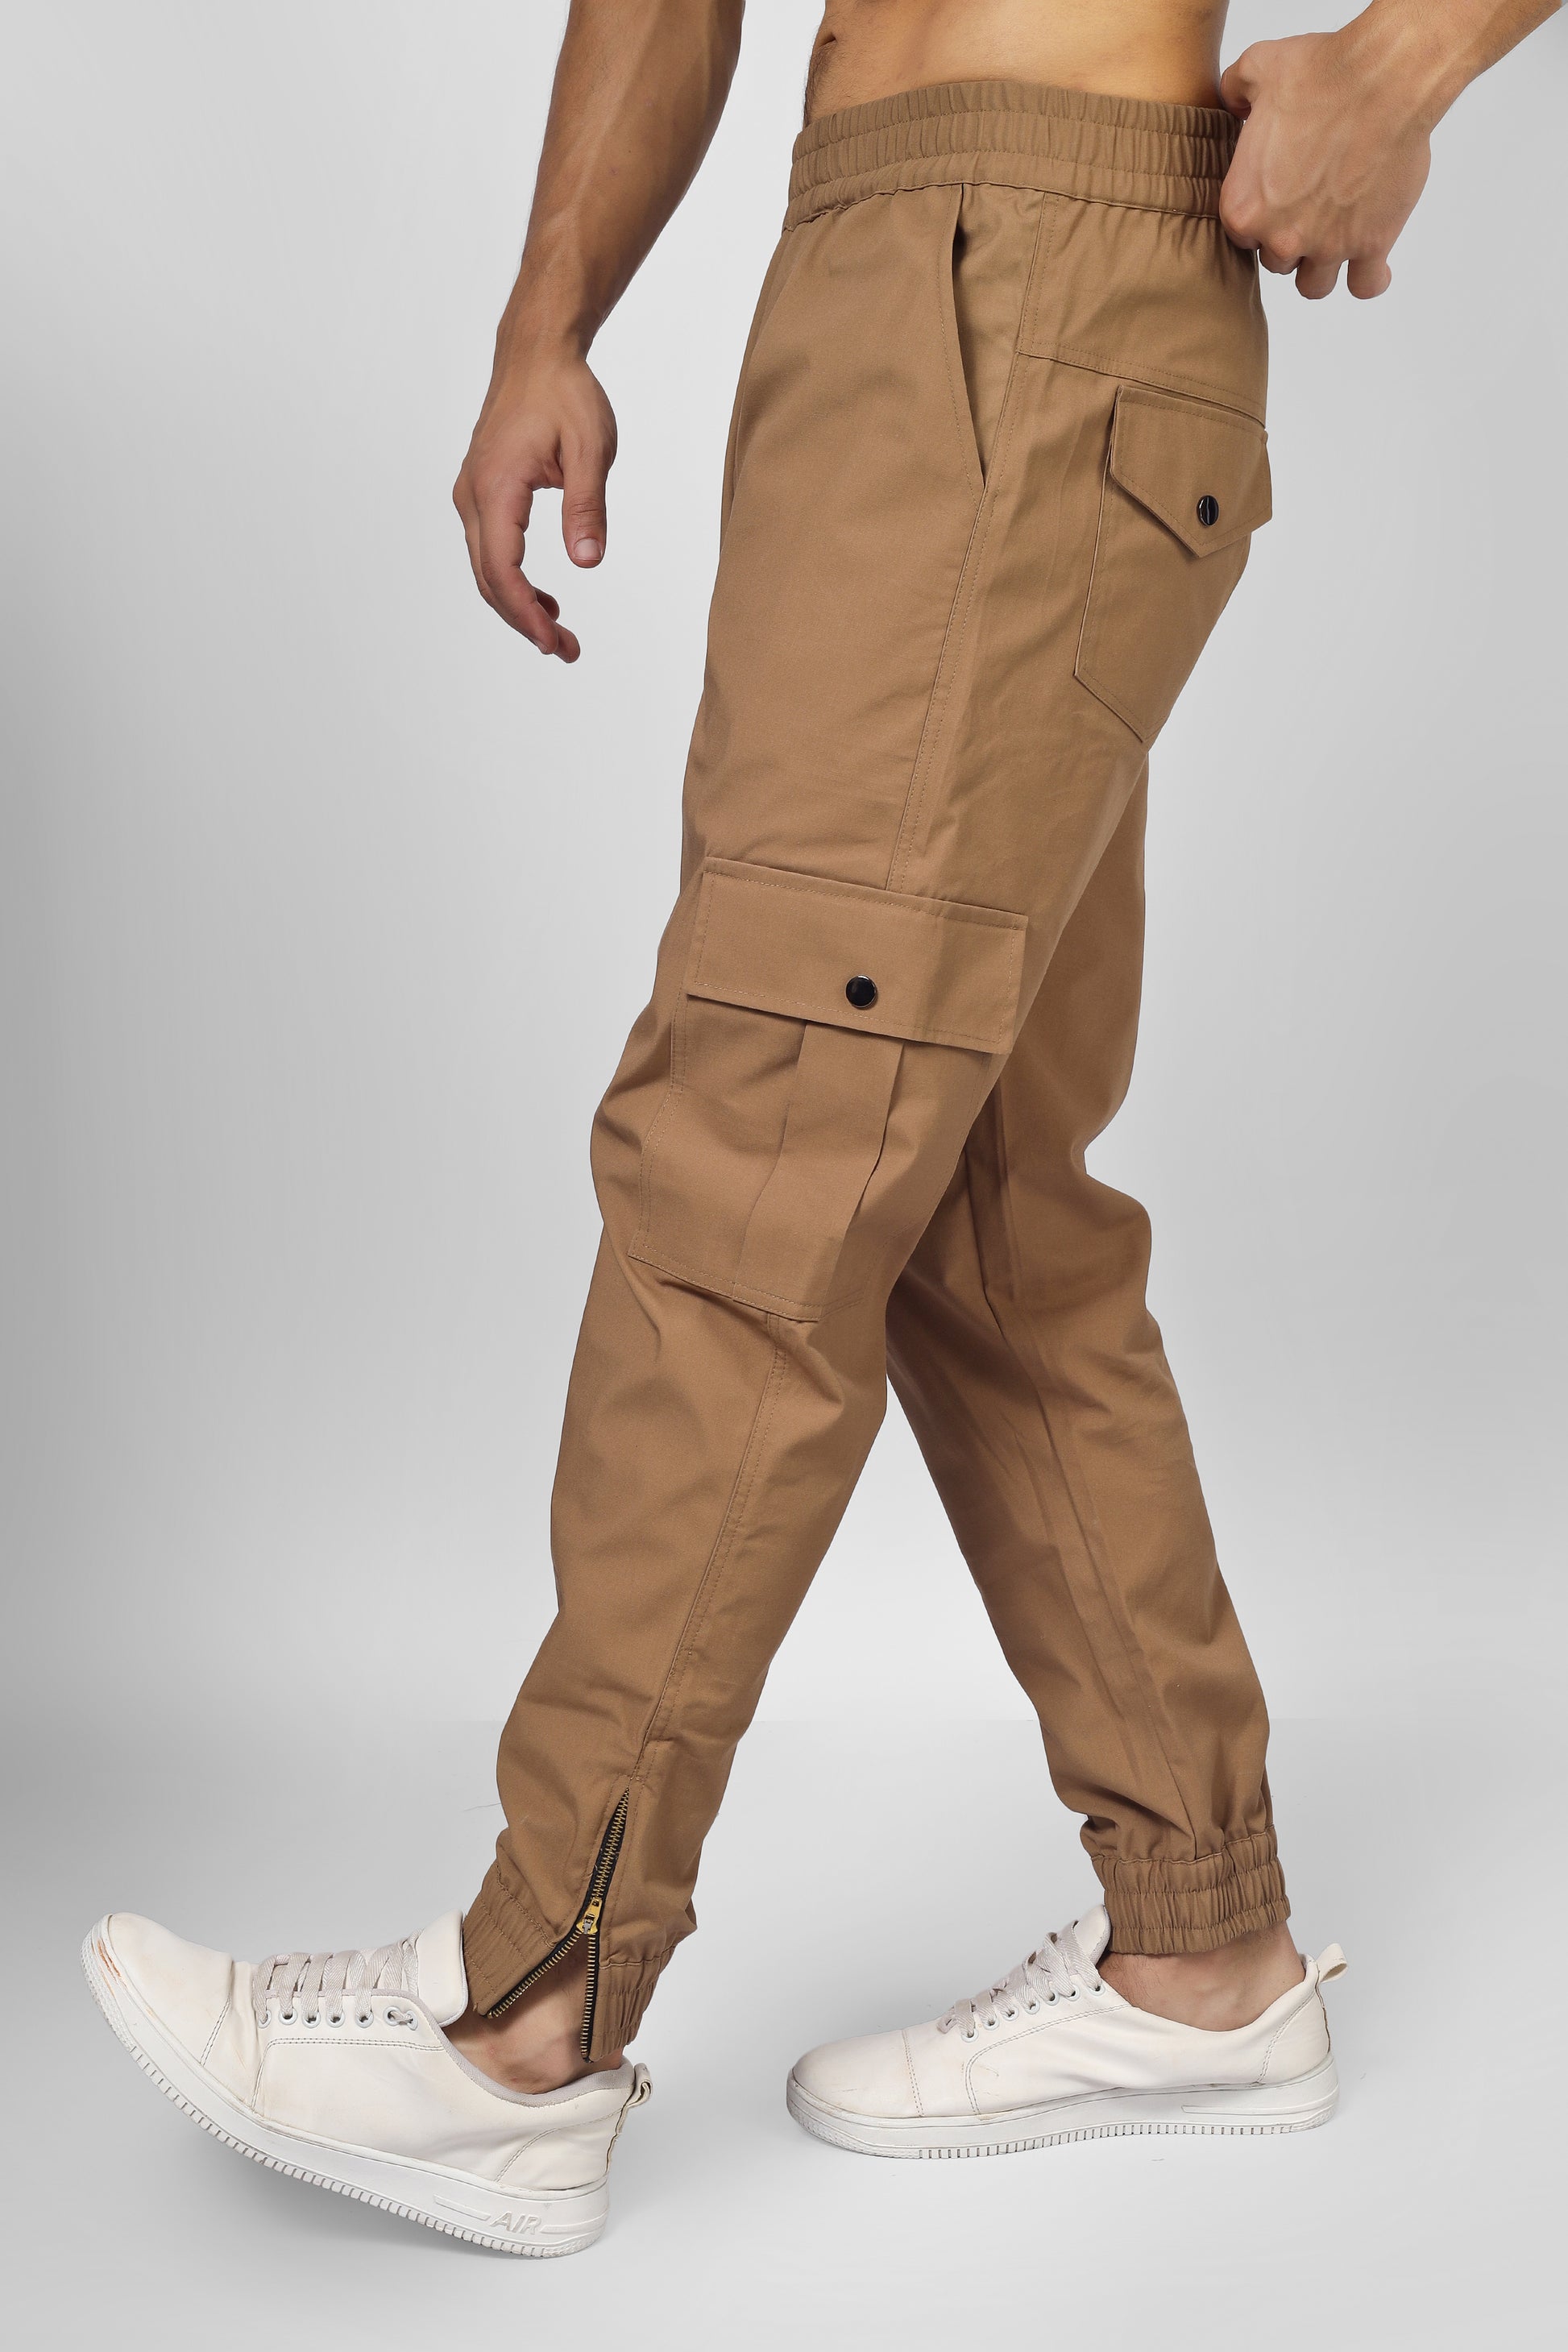 Autumn Brown 6 Pocket Cargo pants